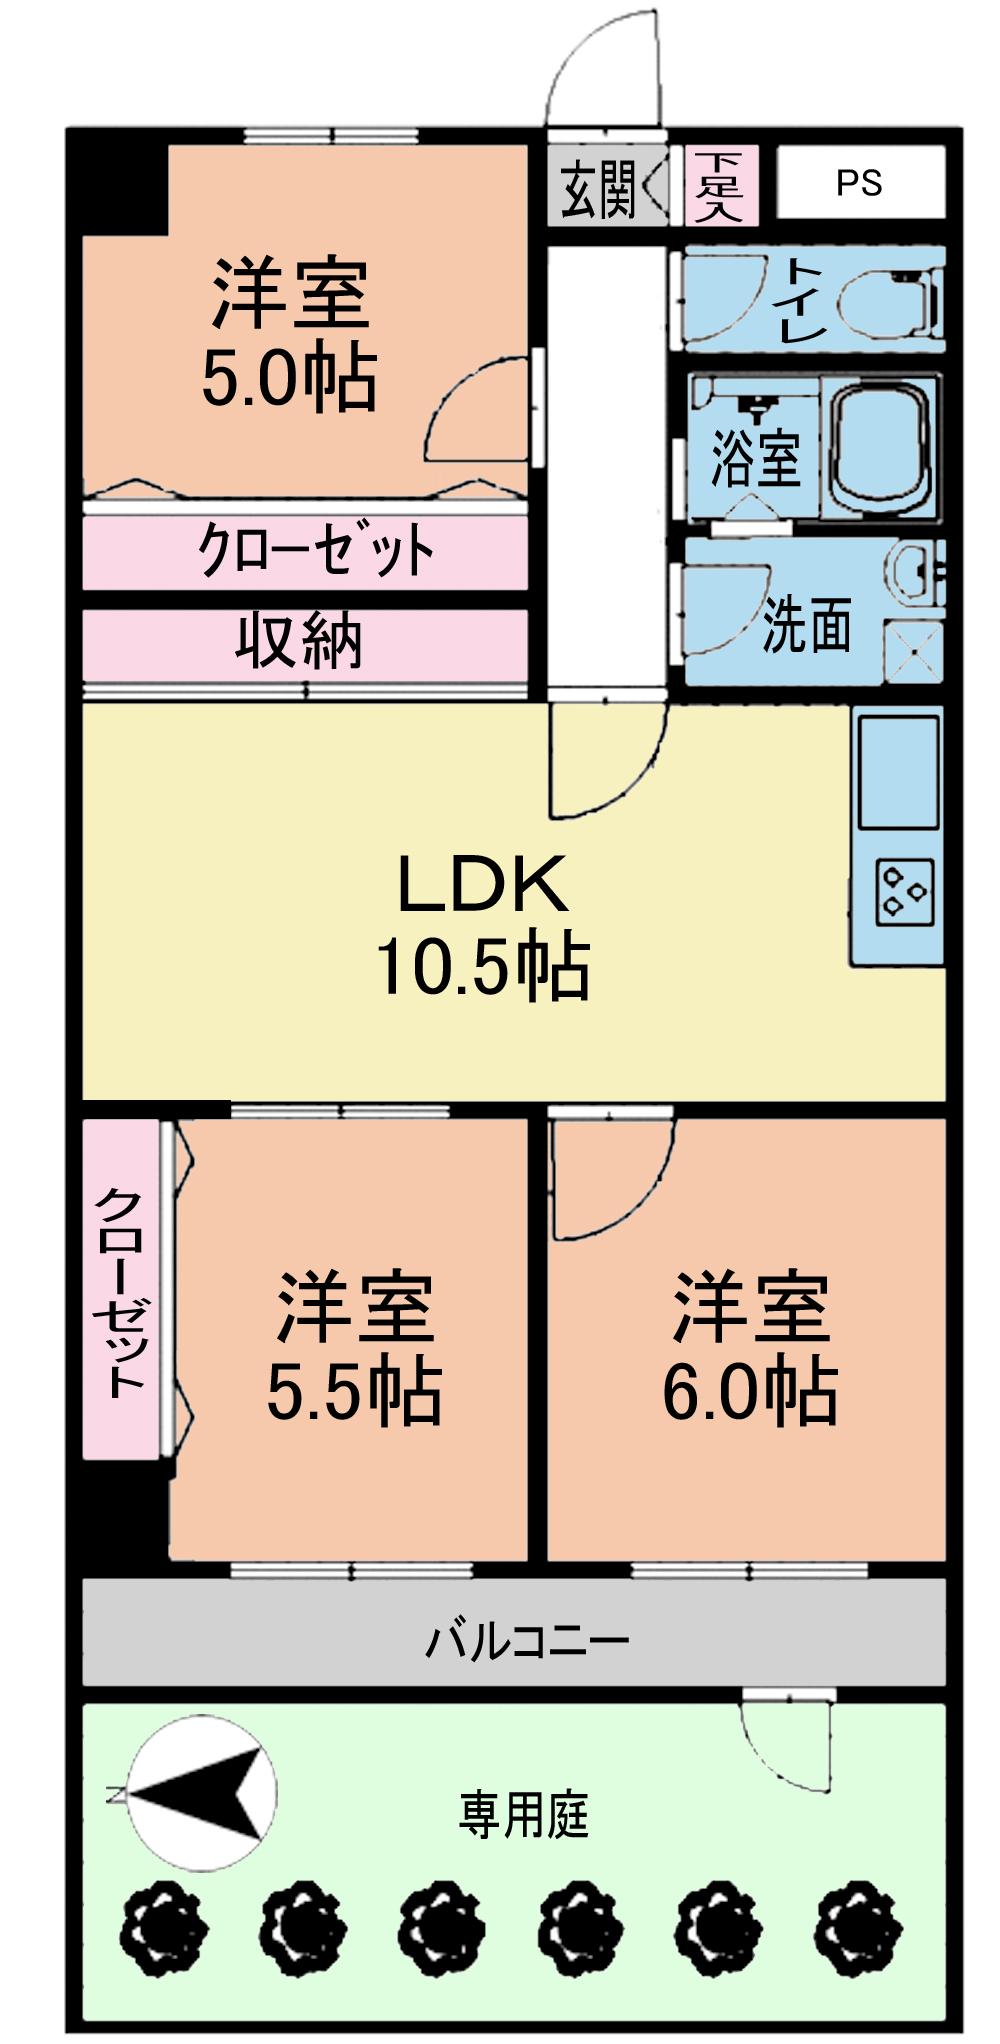 Floor plan. 3LDK, Price 17.8 million yen, Footprint 62.7 sq m , Balcony area 6.6 sq m